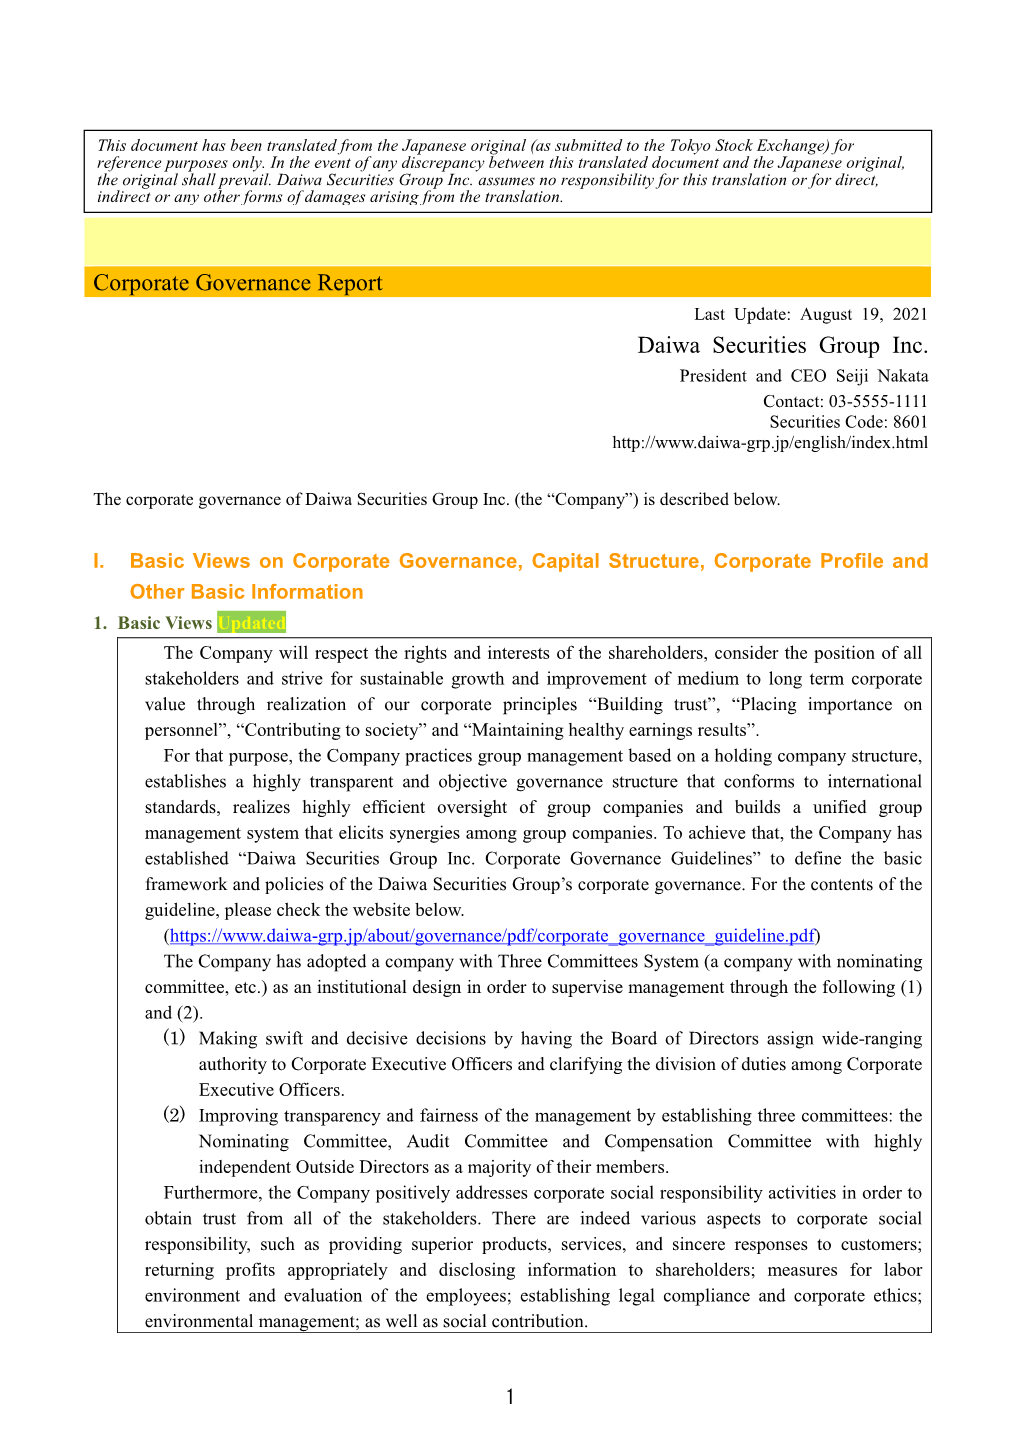 Corporate Governance Report Daiwa Securities Group Inc